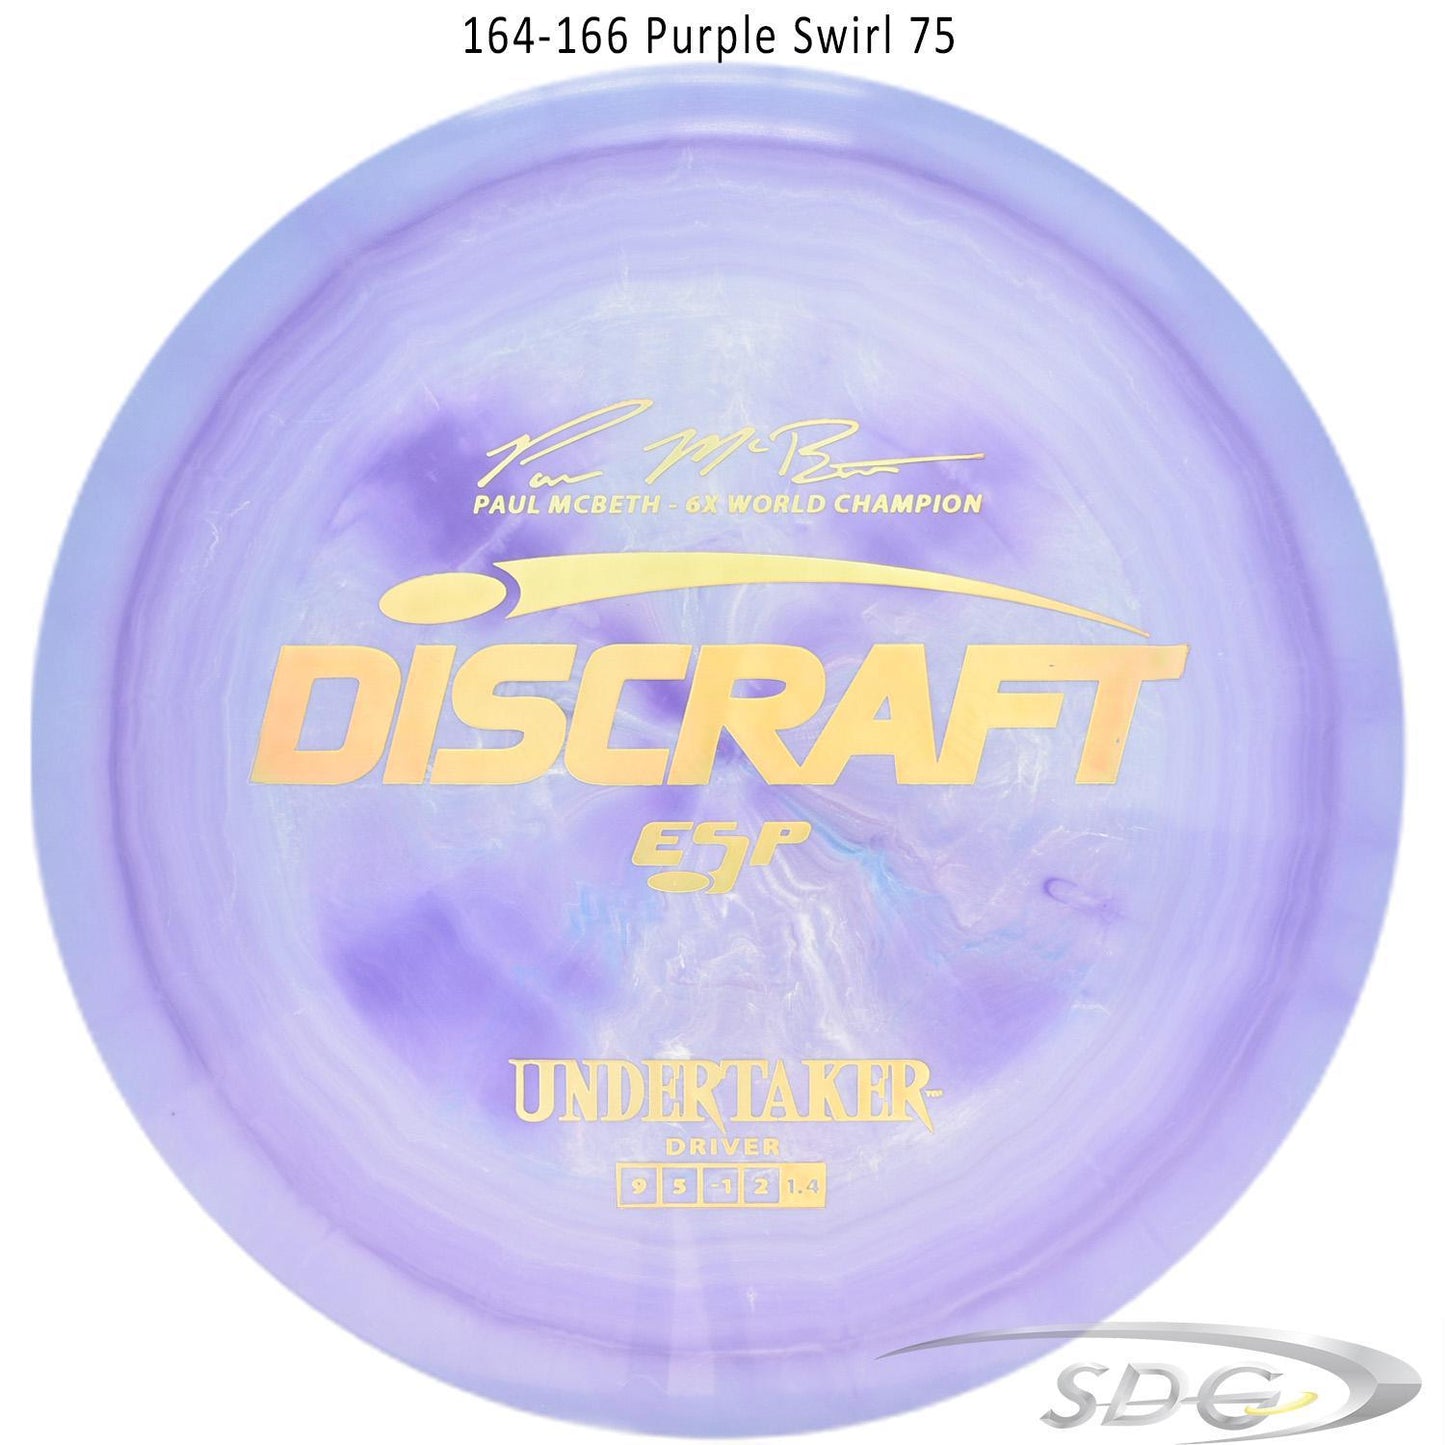 discraft-esp-undertaker-6x-paul-mcbeth-signature-series-disc-golf-distance-driver 164-166 Purple Swirl 75